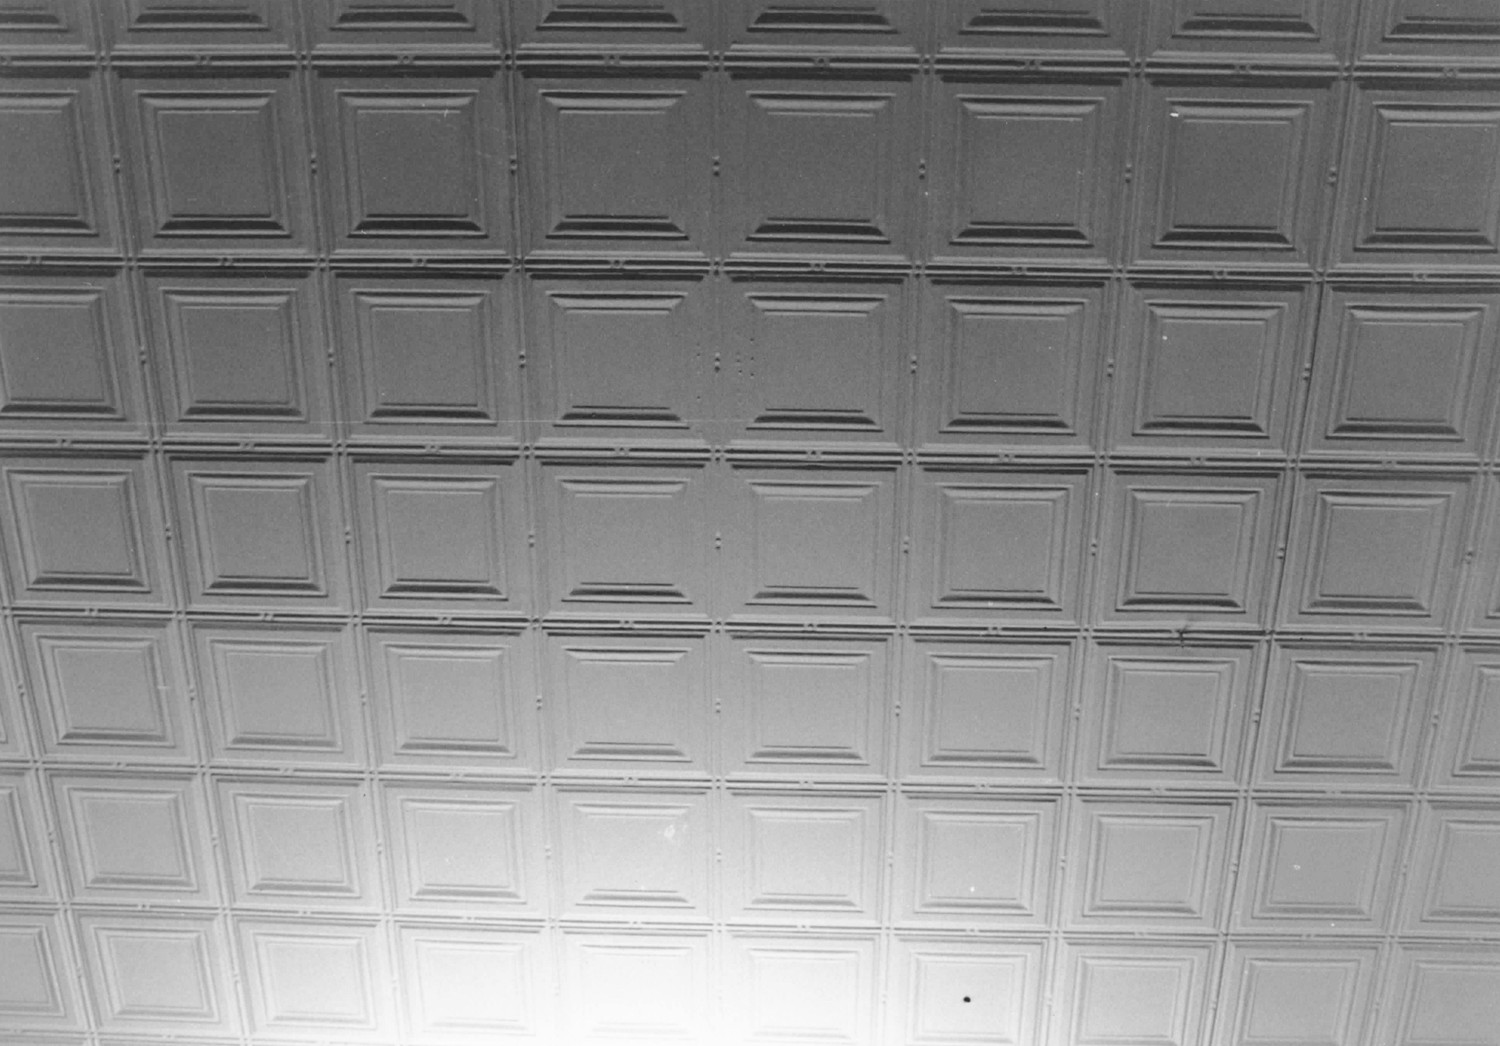 Belk-Hudsons Department Store - Fowlers Store, Huntsville Alabama Stamped metal ceiling at main floor of east building looking north (1995)